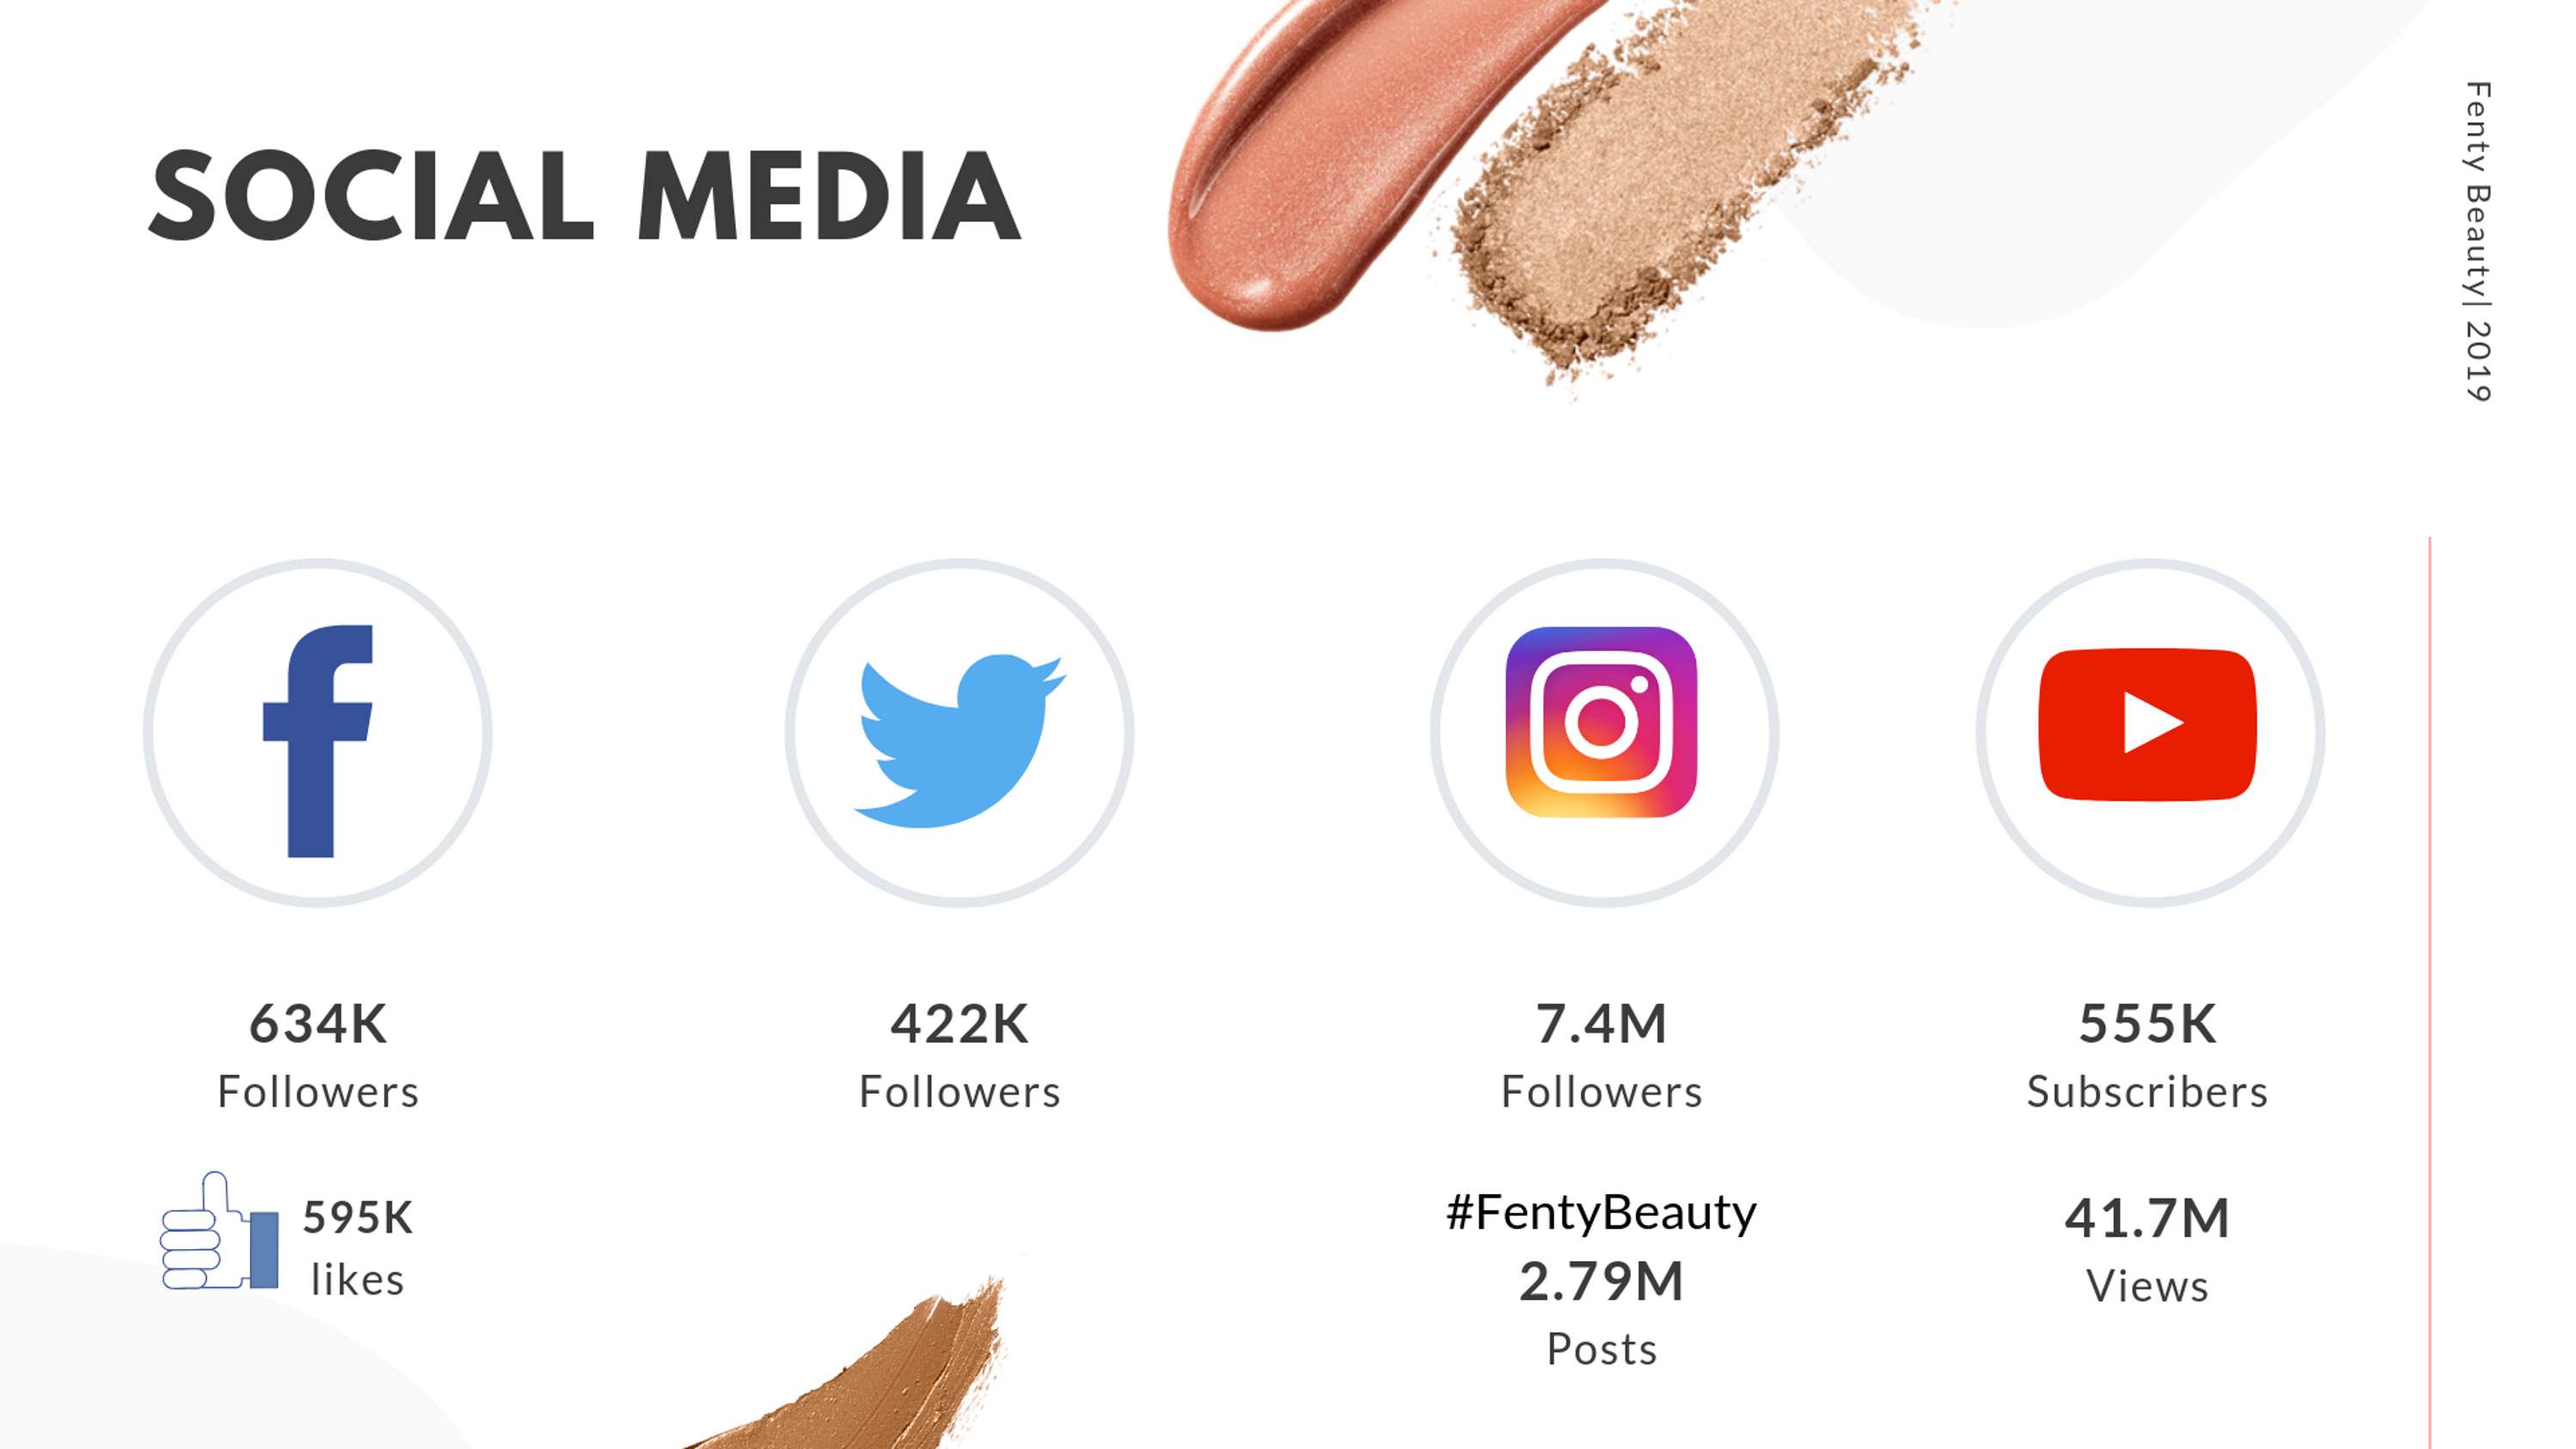 Fenty Beauty Brand Analysis by MiaMorales95 - Issuu